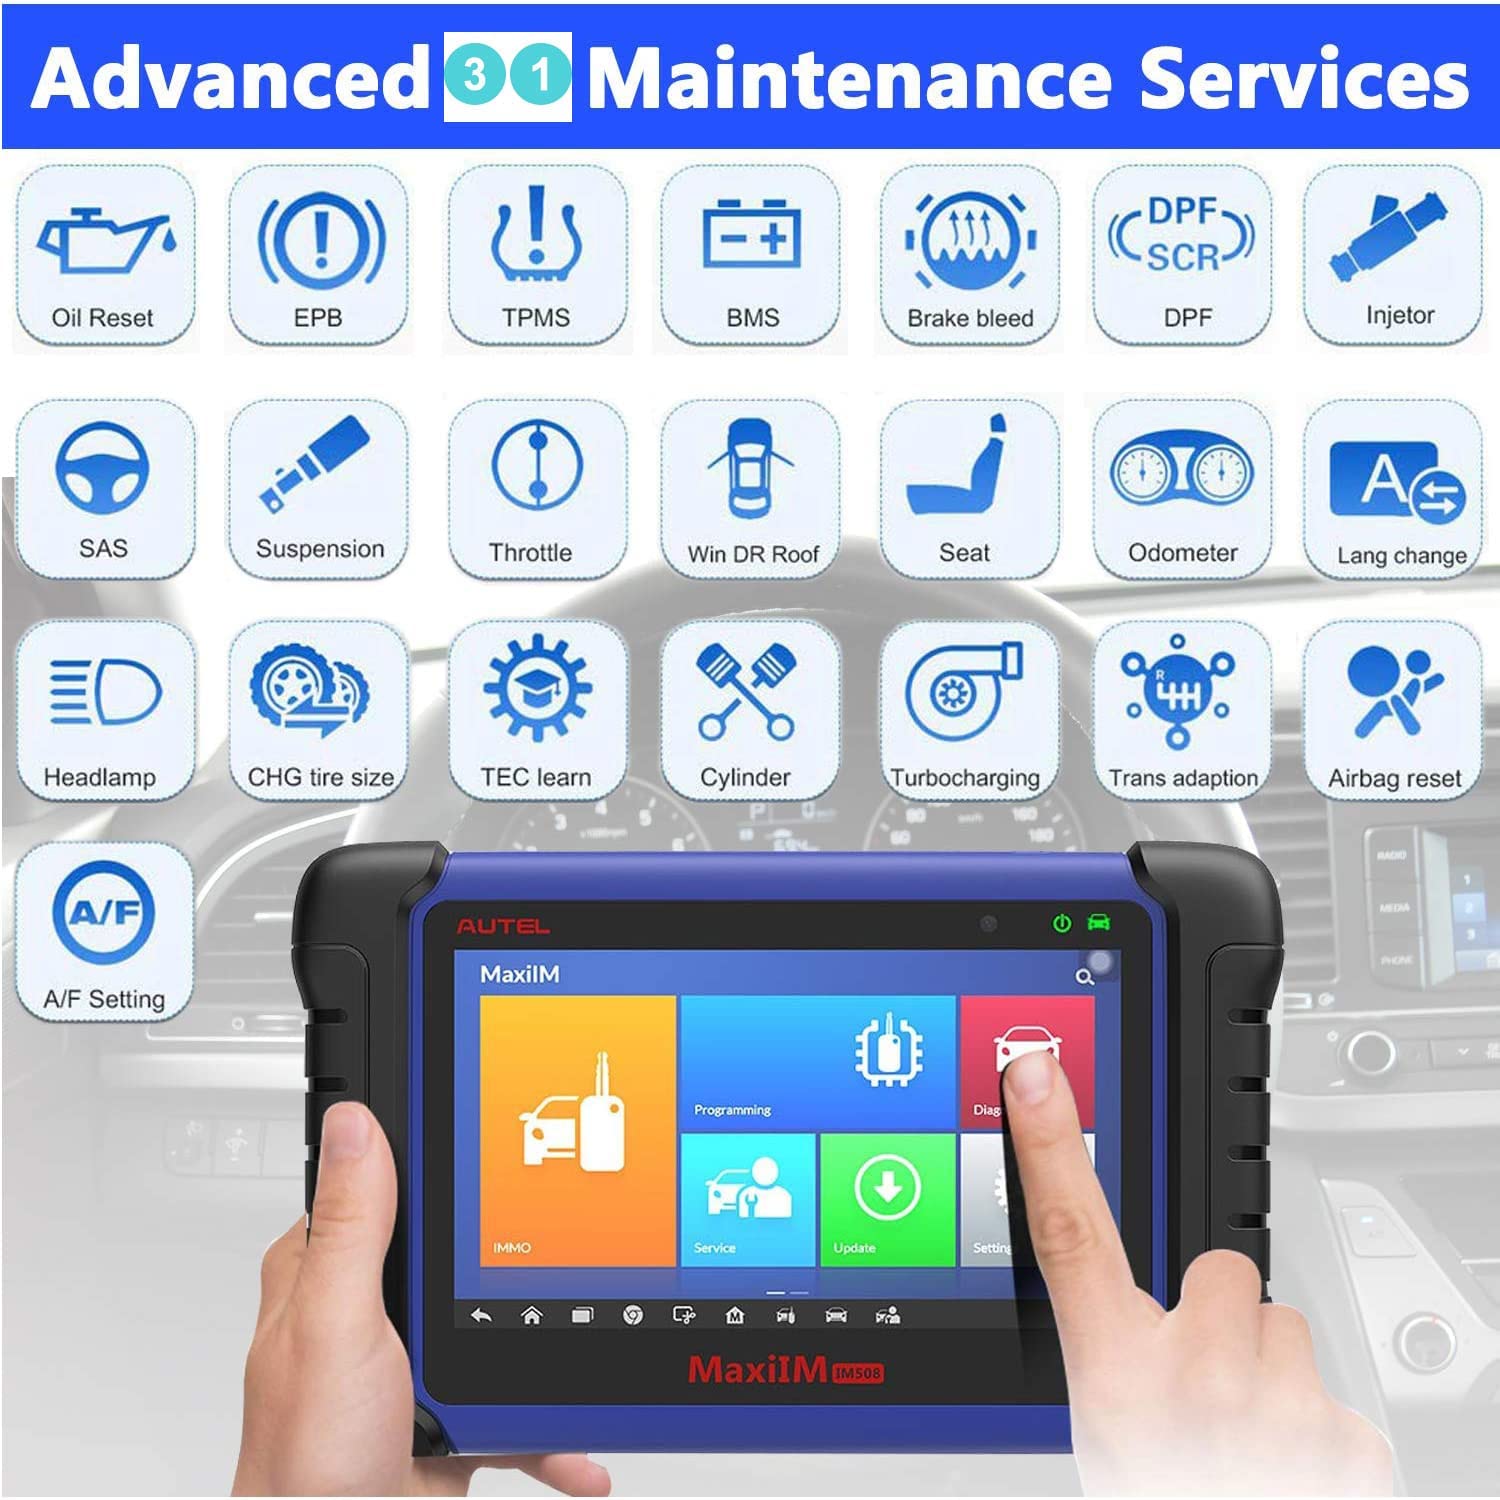 Autel im508 ecu programming tool has 31 advanced maintenance service